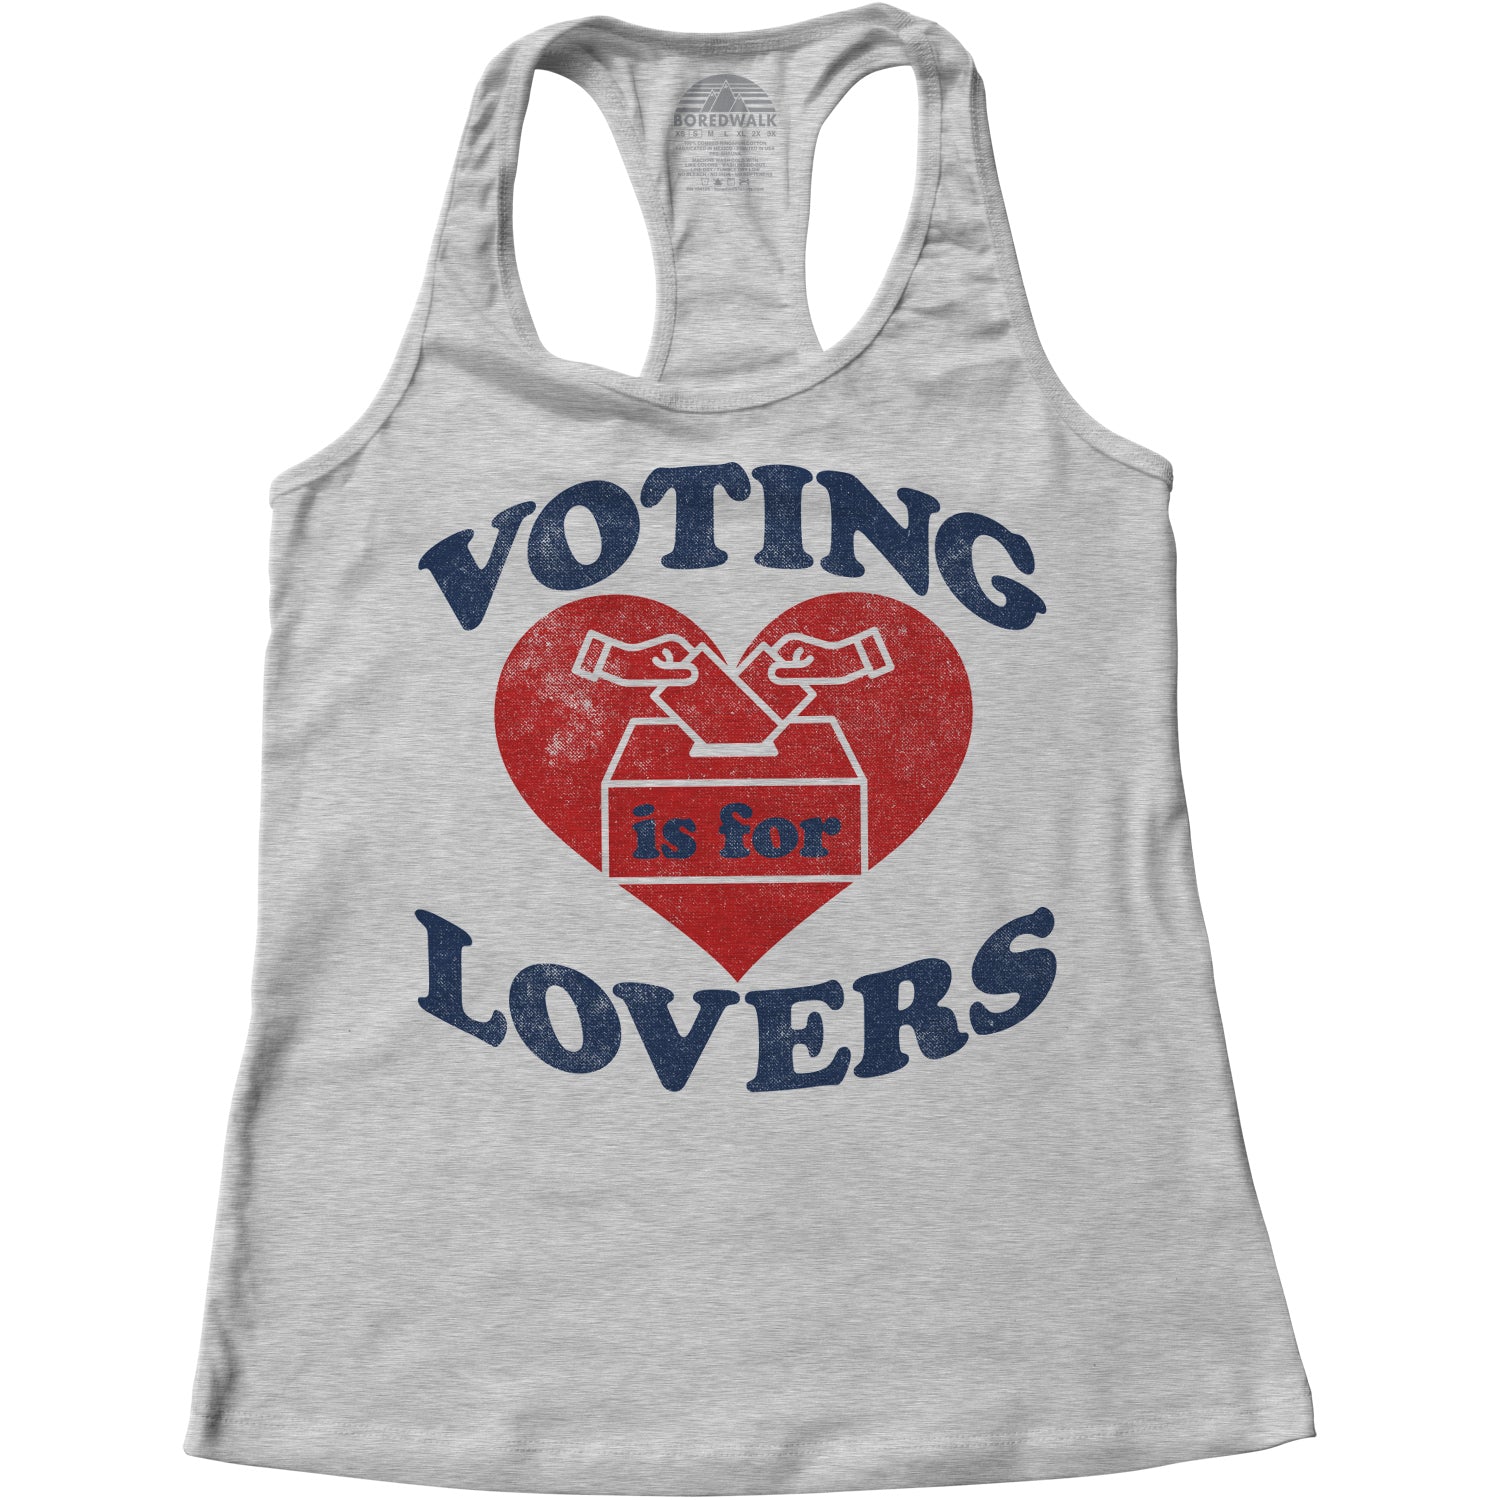 Women's Voting Is For Lovers Racerback Tank Top